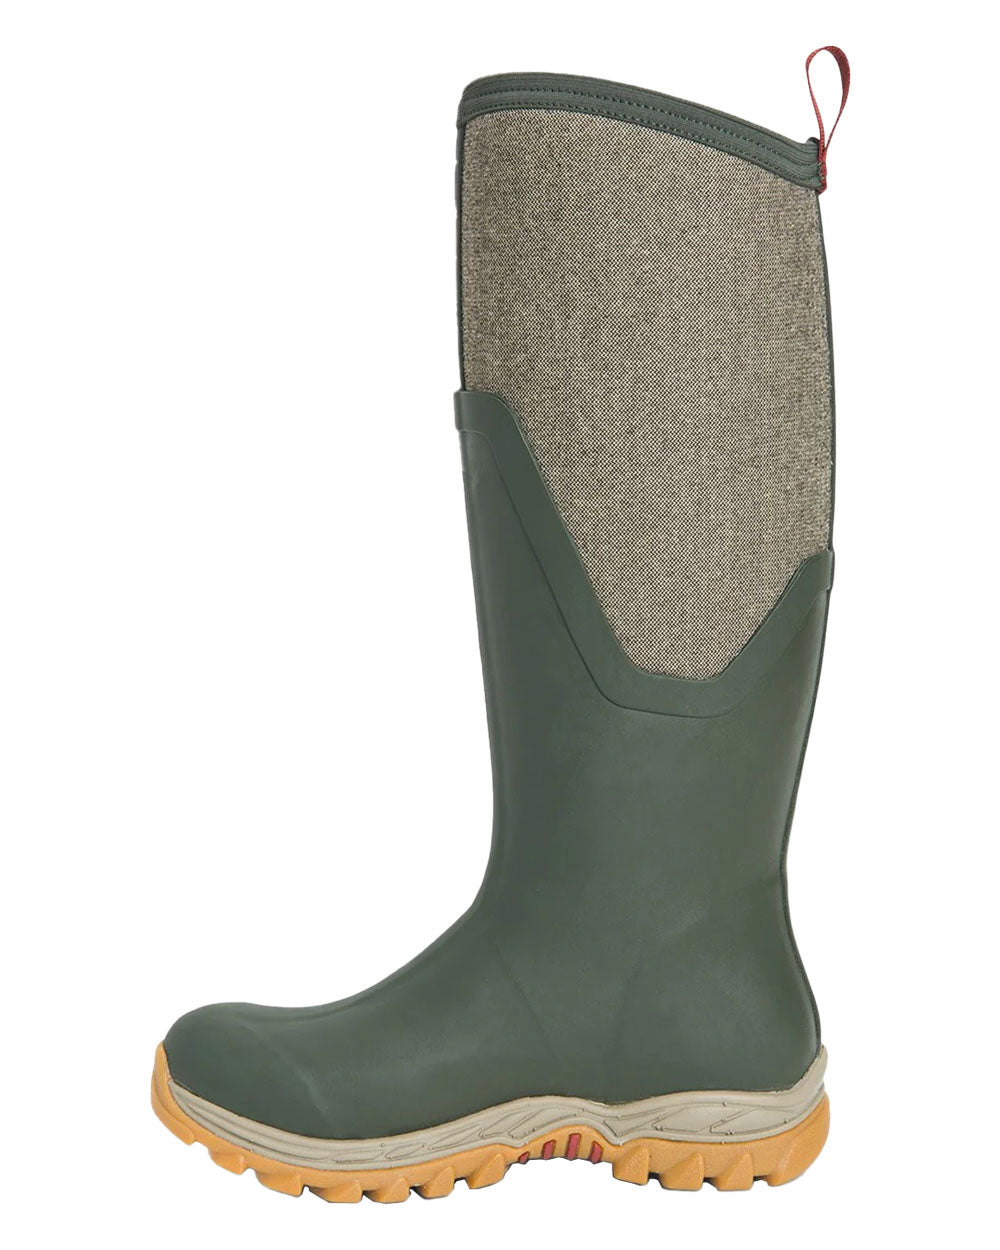 Olive Herringbone Muck Boots Womens Artic Sport II Tall Wellingtons on White background 